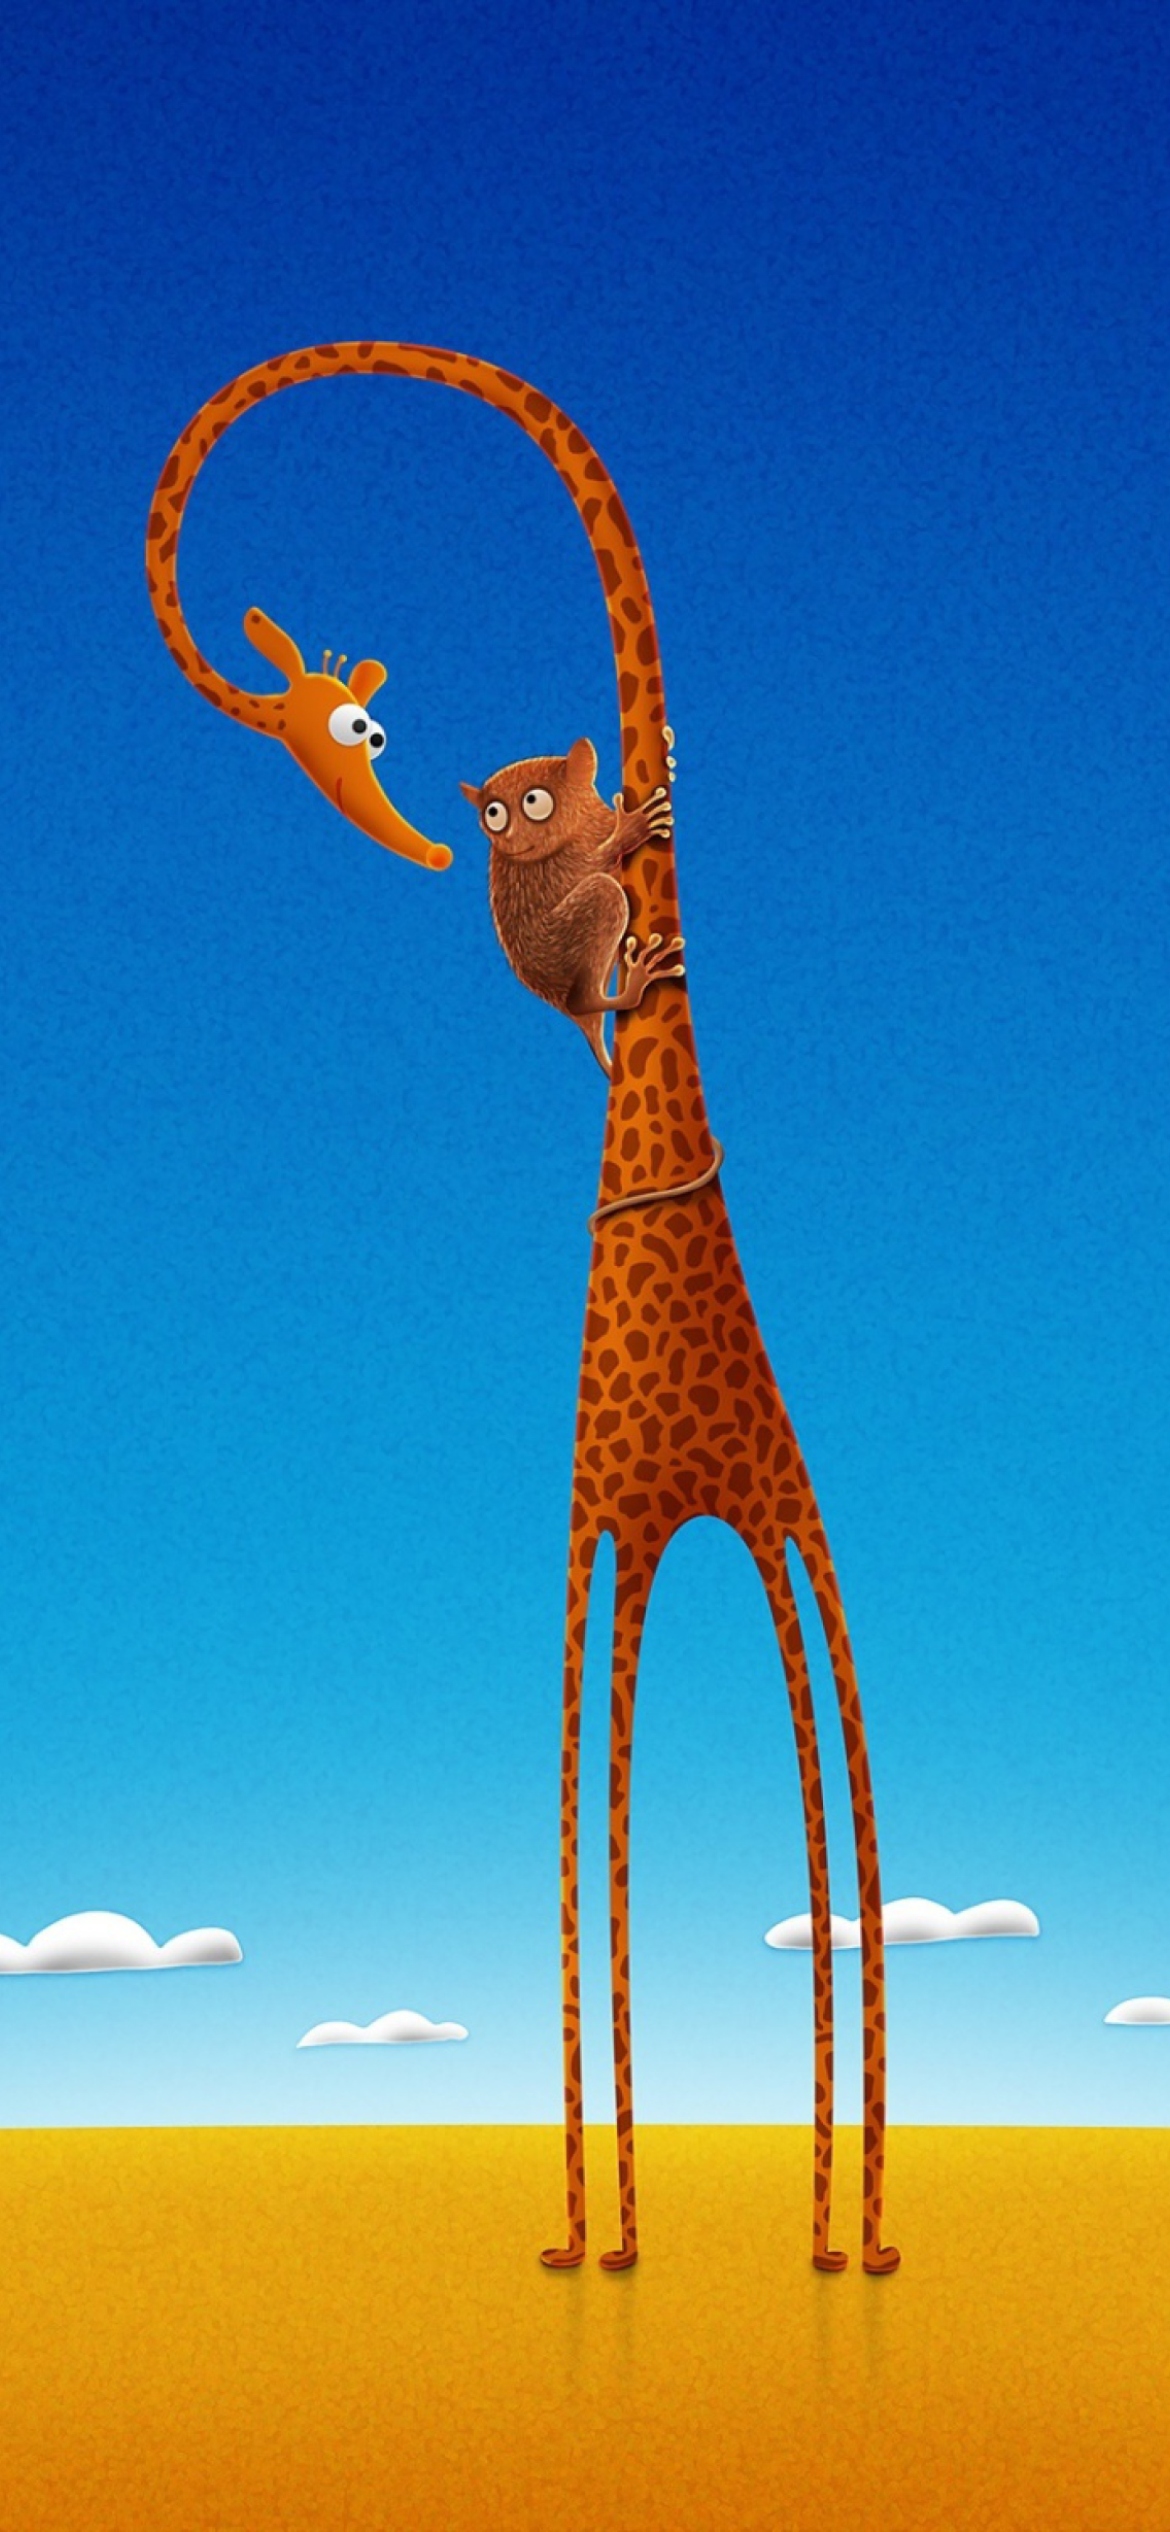 Funny Giraffe With Friend wallpaper 1170x2532